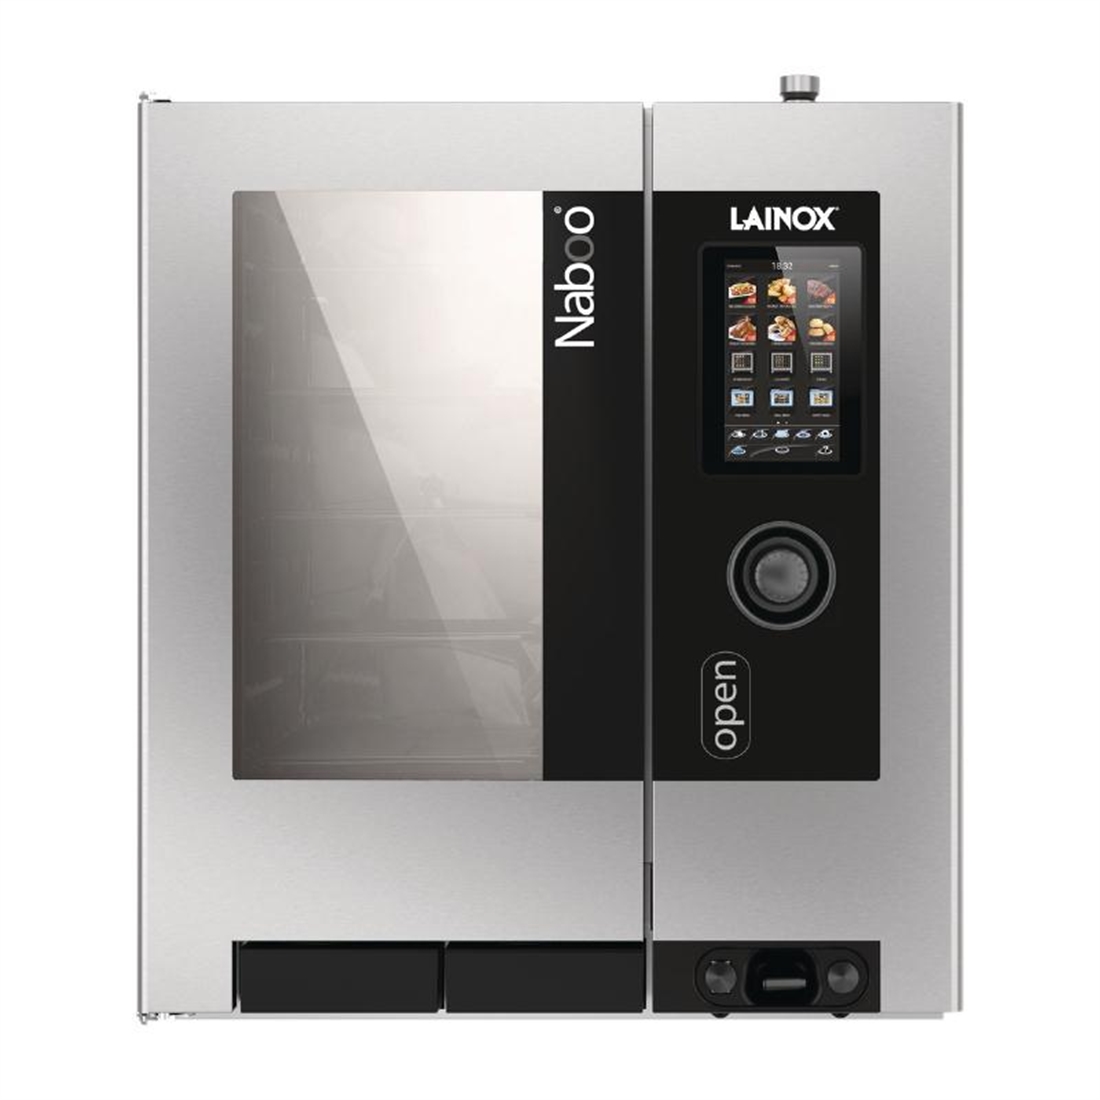 Lainox Naboo 10 Grid Combi Oven Gas NAGB101